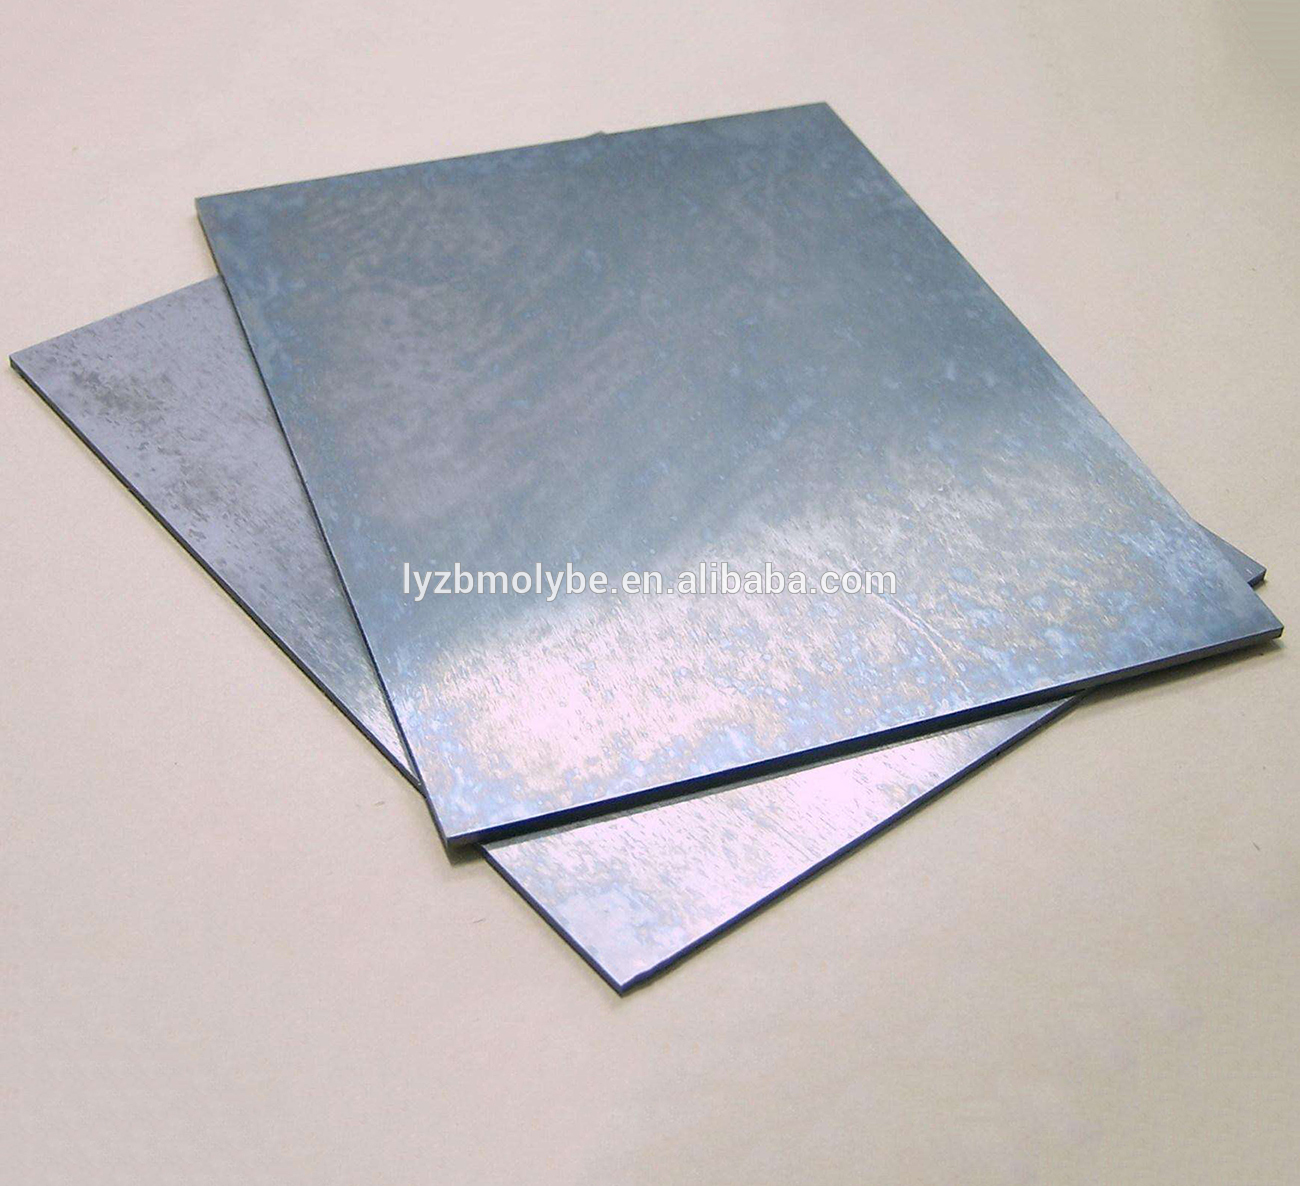 Molybdenum plate for high temperature vacuum furnace manufacturing